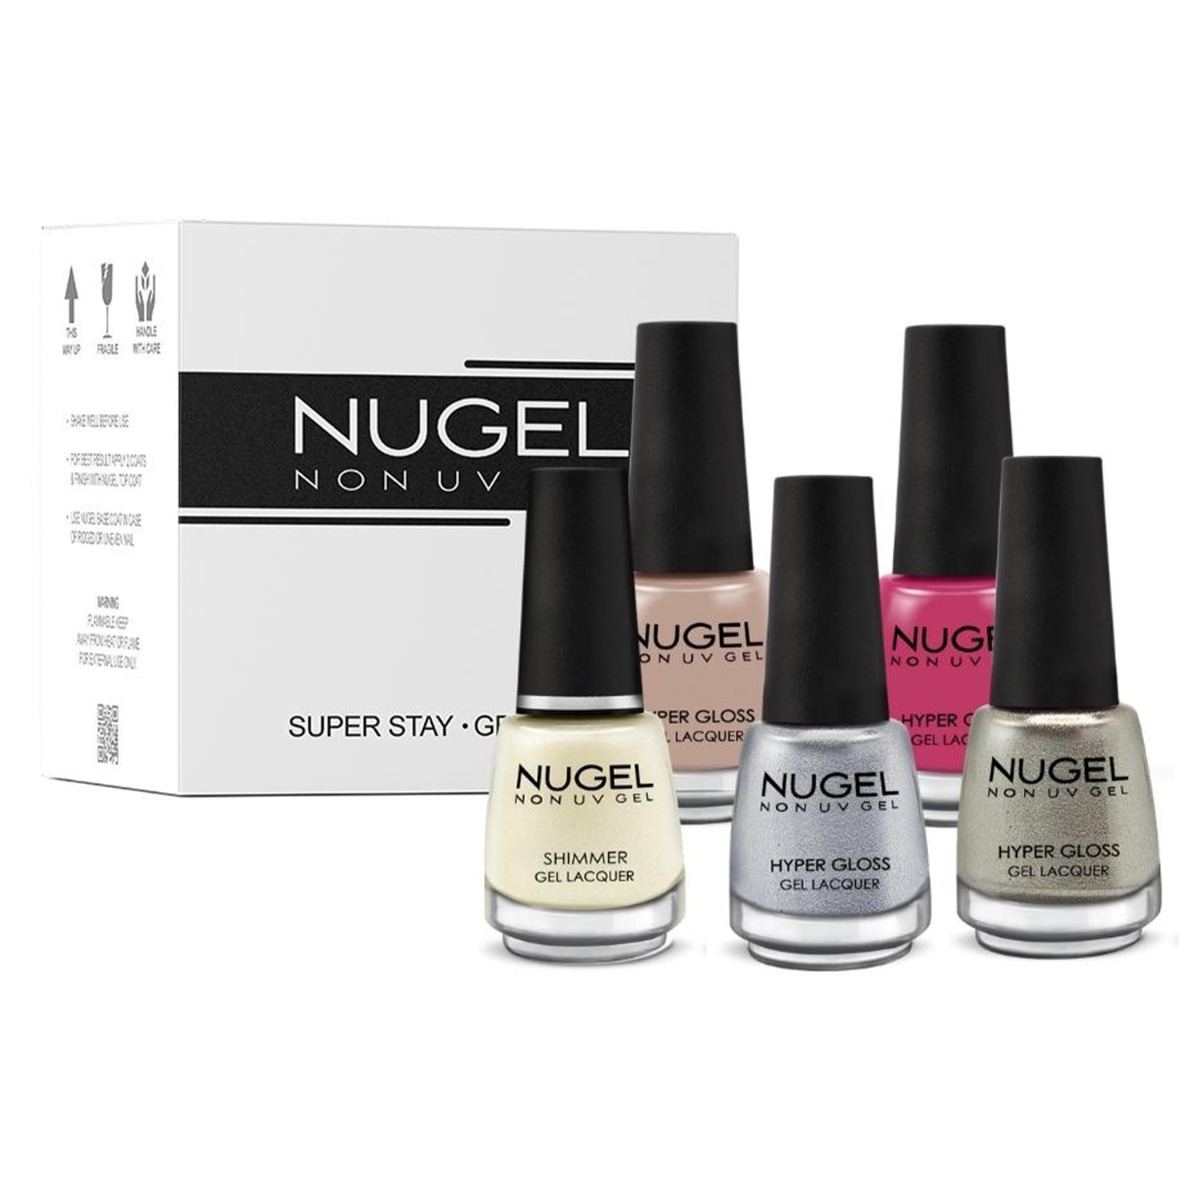 NUGEL 5 In 1 Combo 25 Quick Dry Gel Finish Nail Paint - Wedding Season, Nail Kit, 65ml